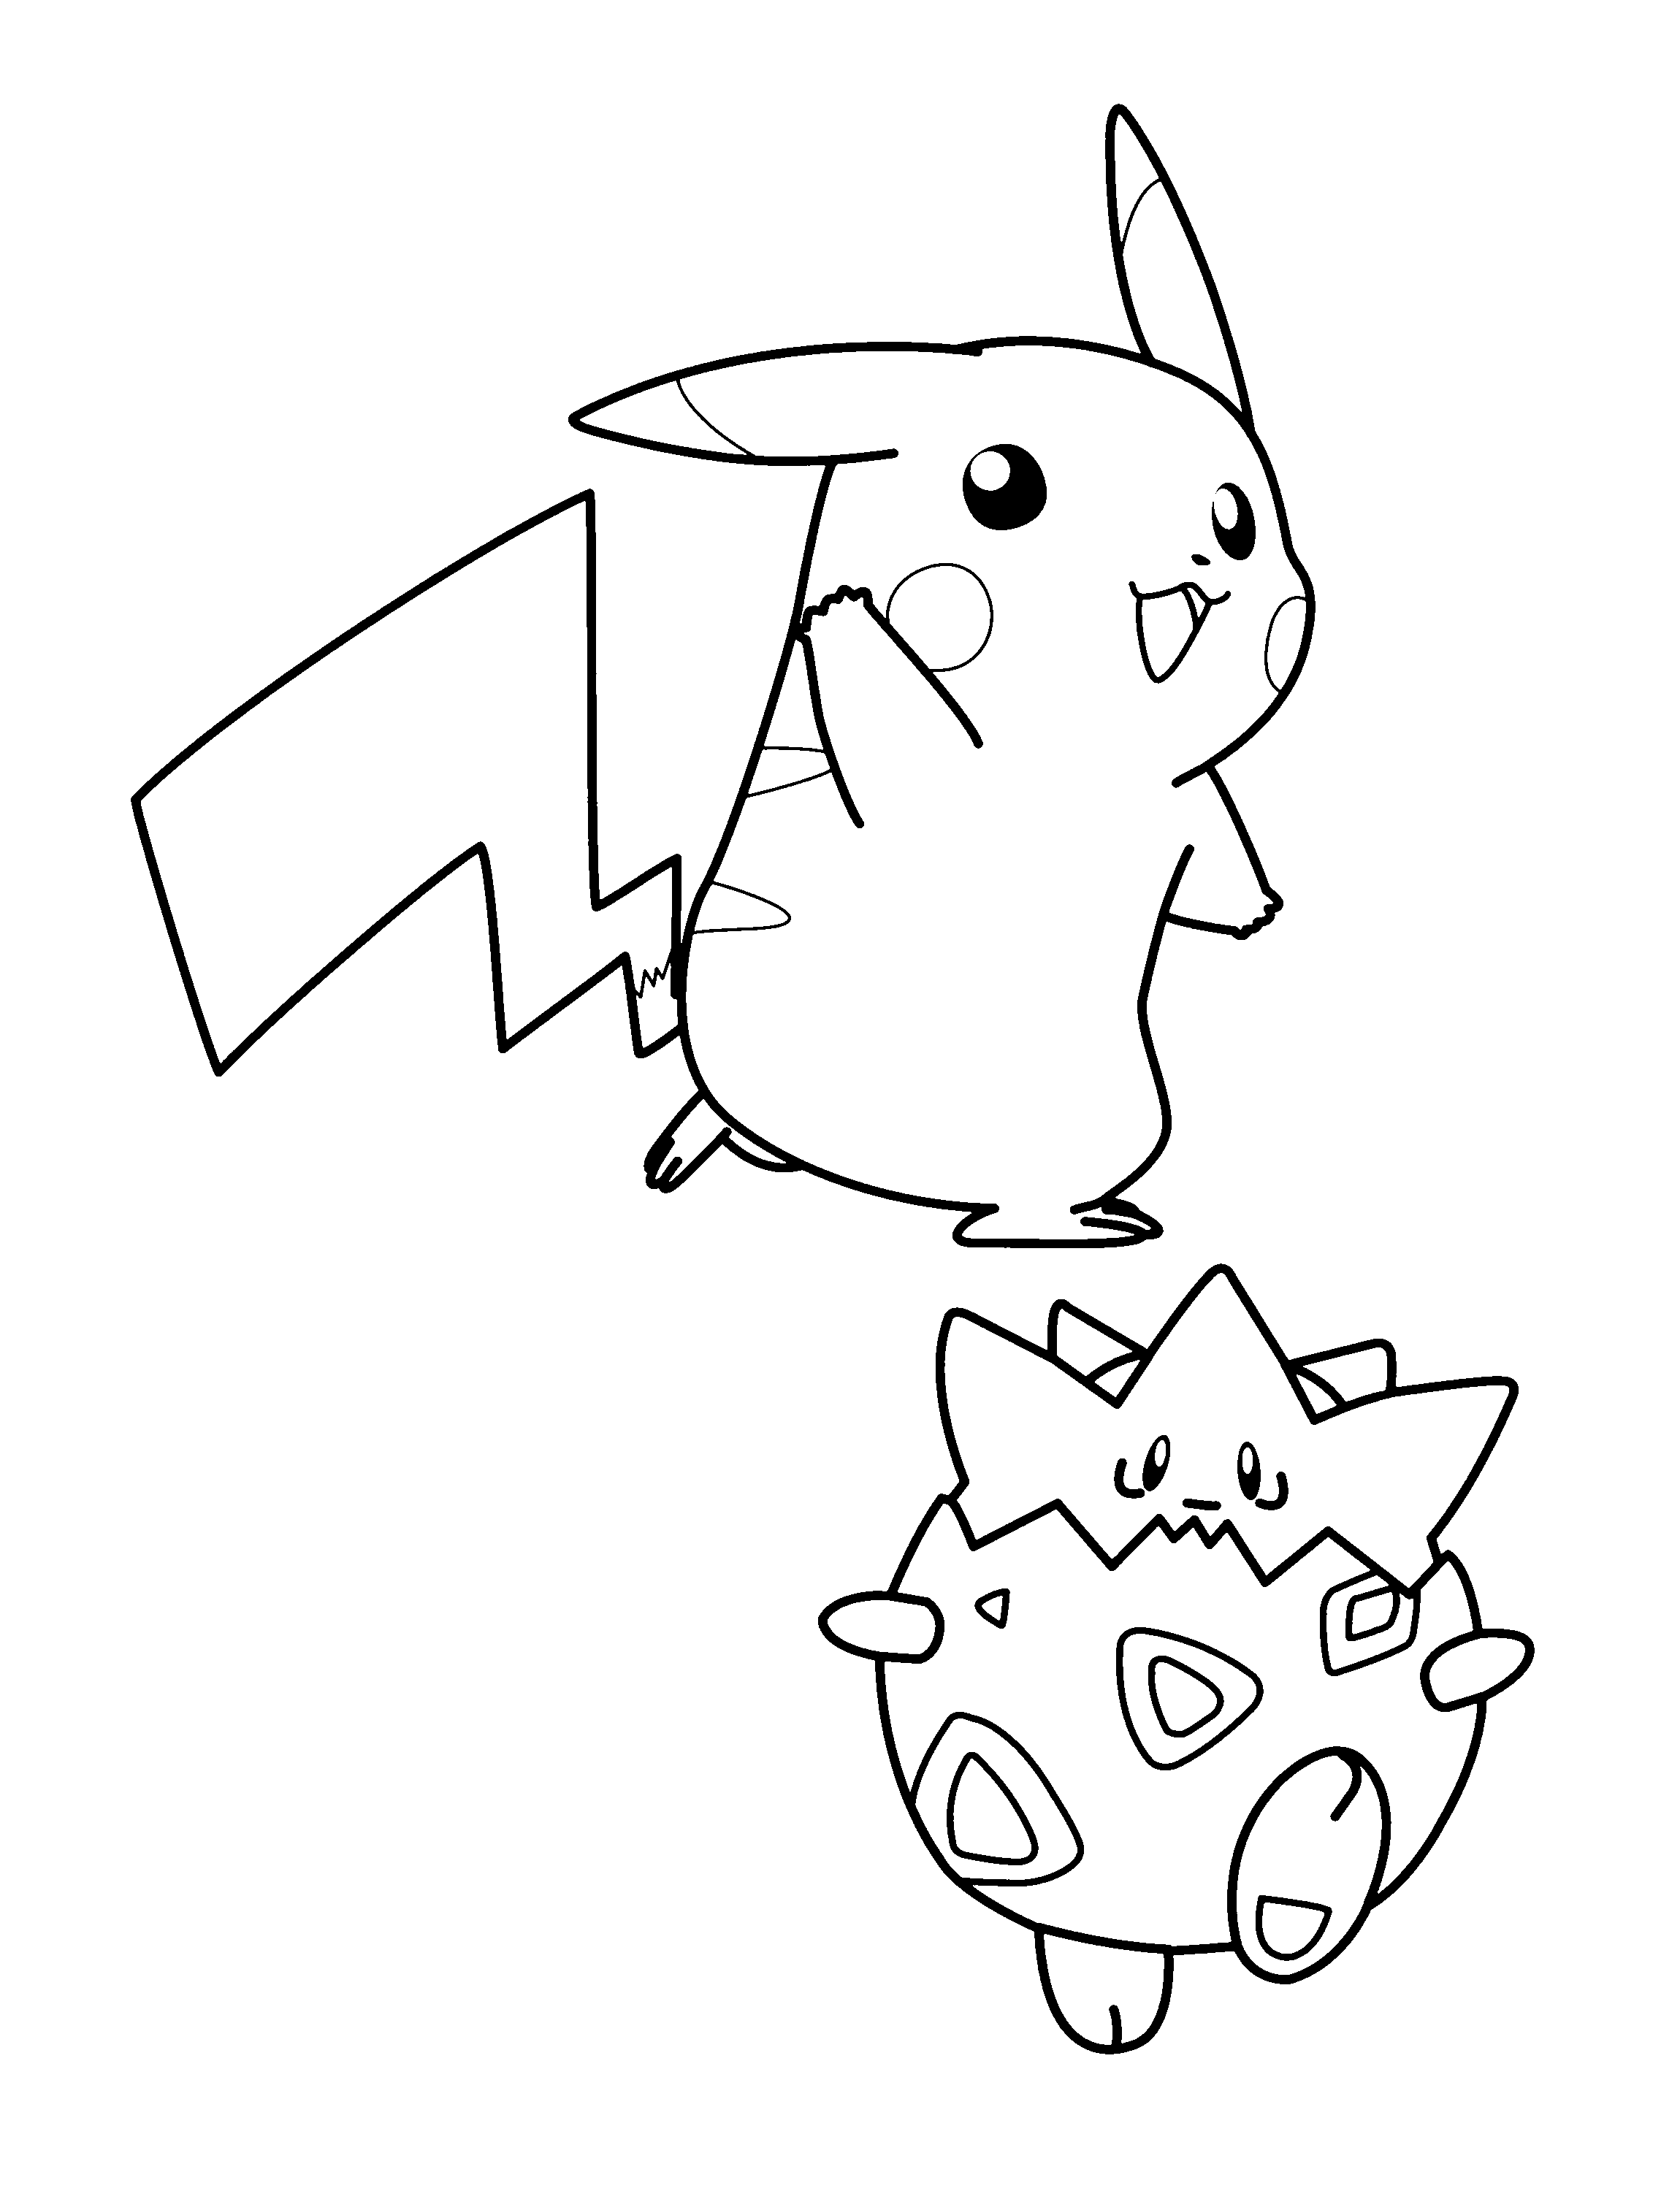 Pokemon